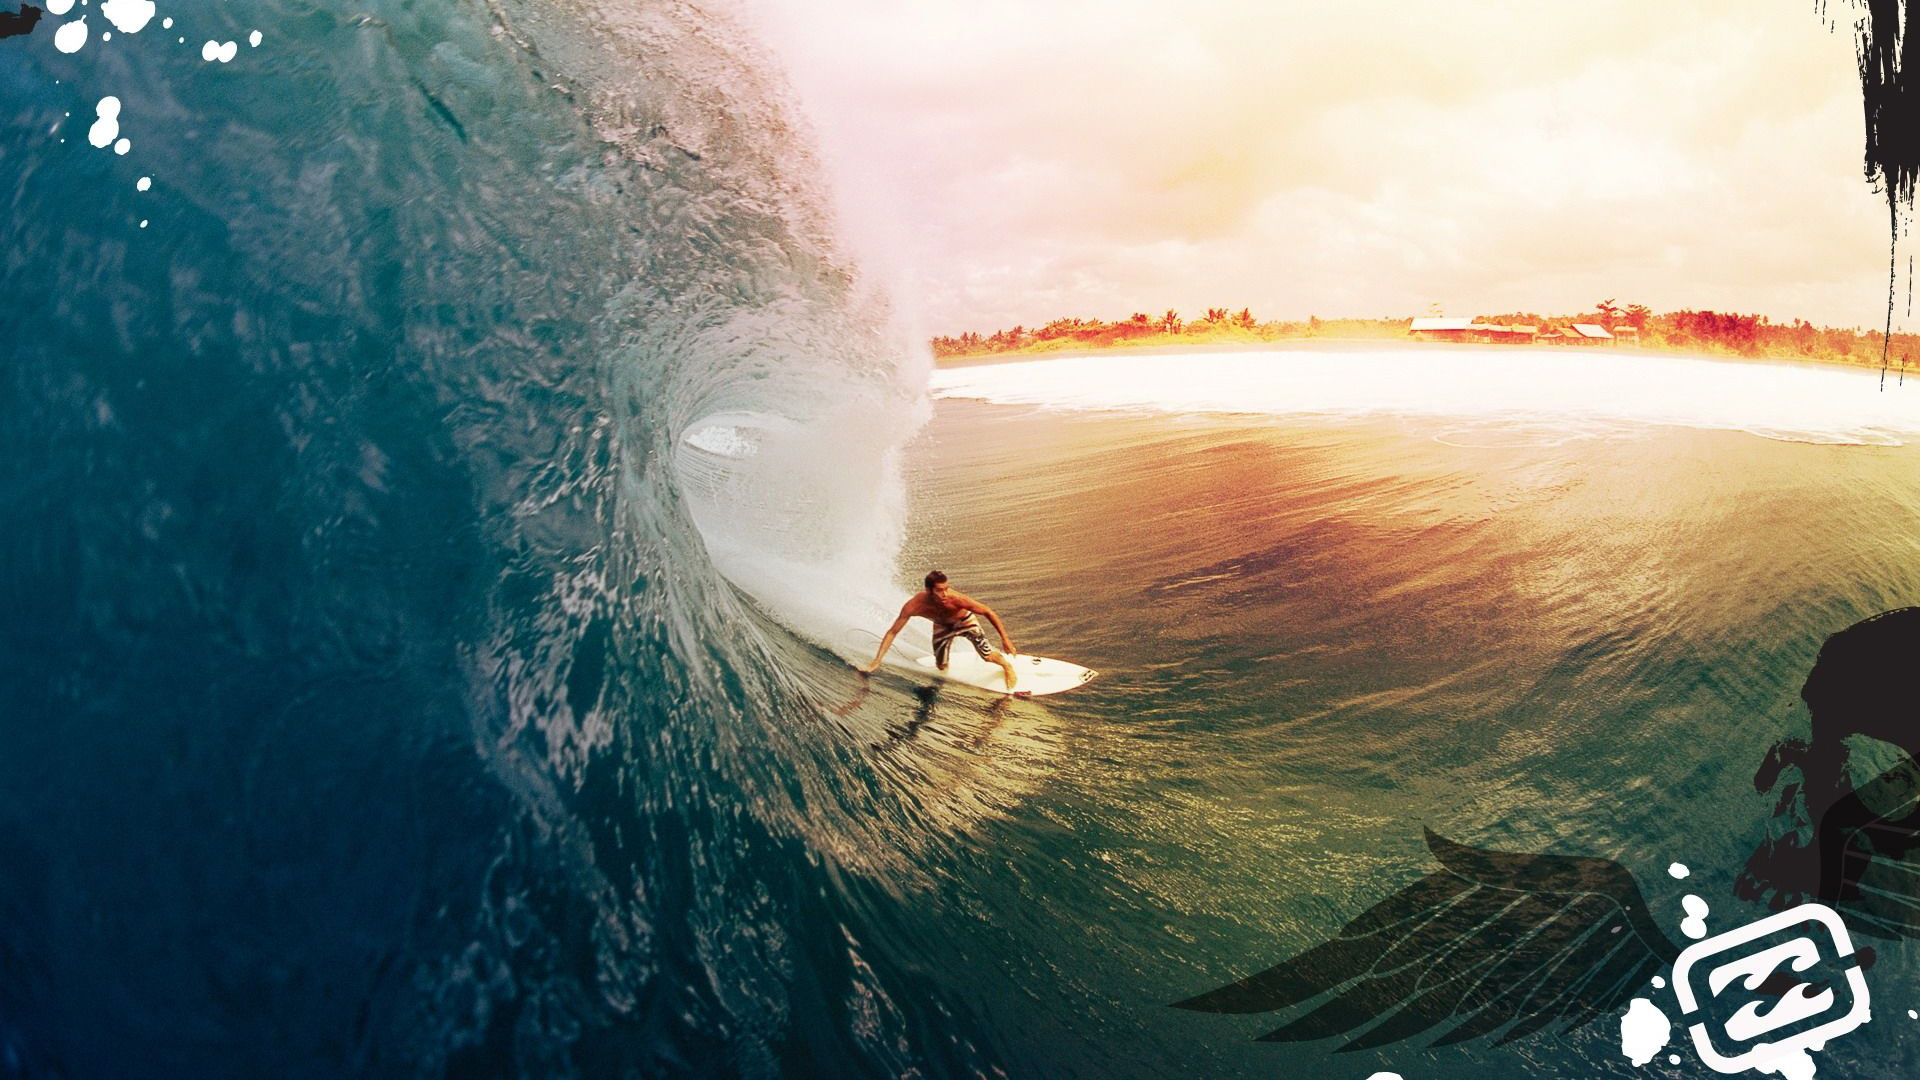 Surfer surfing 1080p Full HD desktop background Full HD Wallpapers